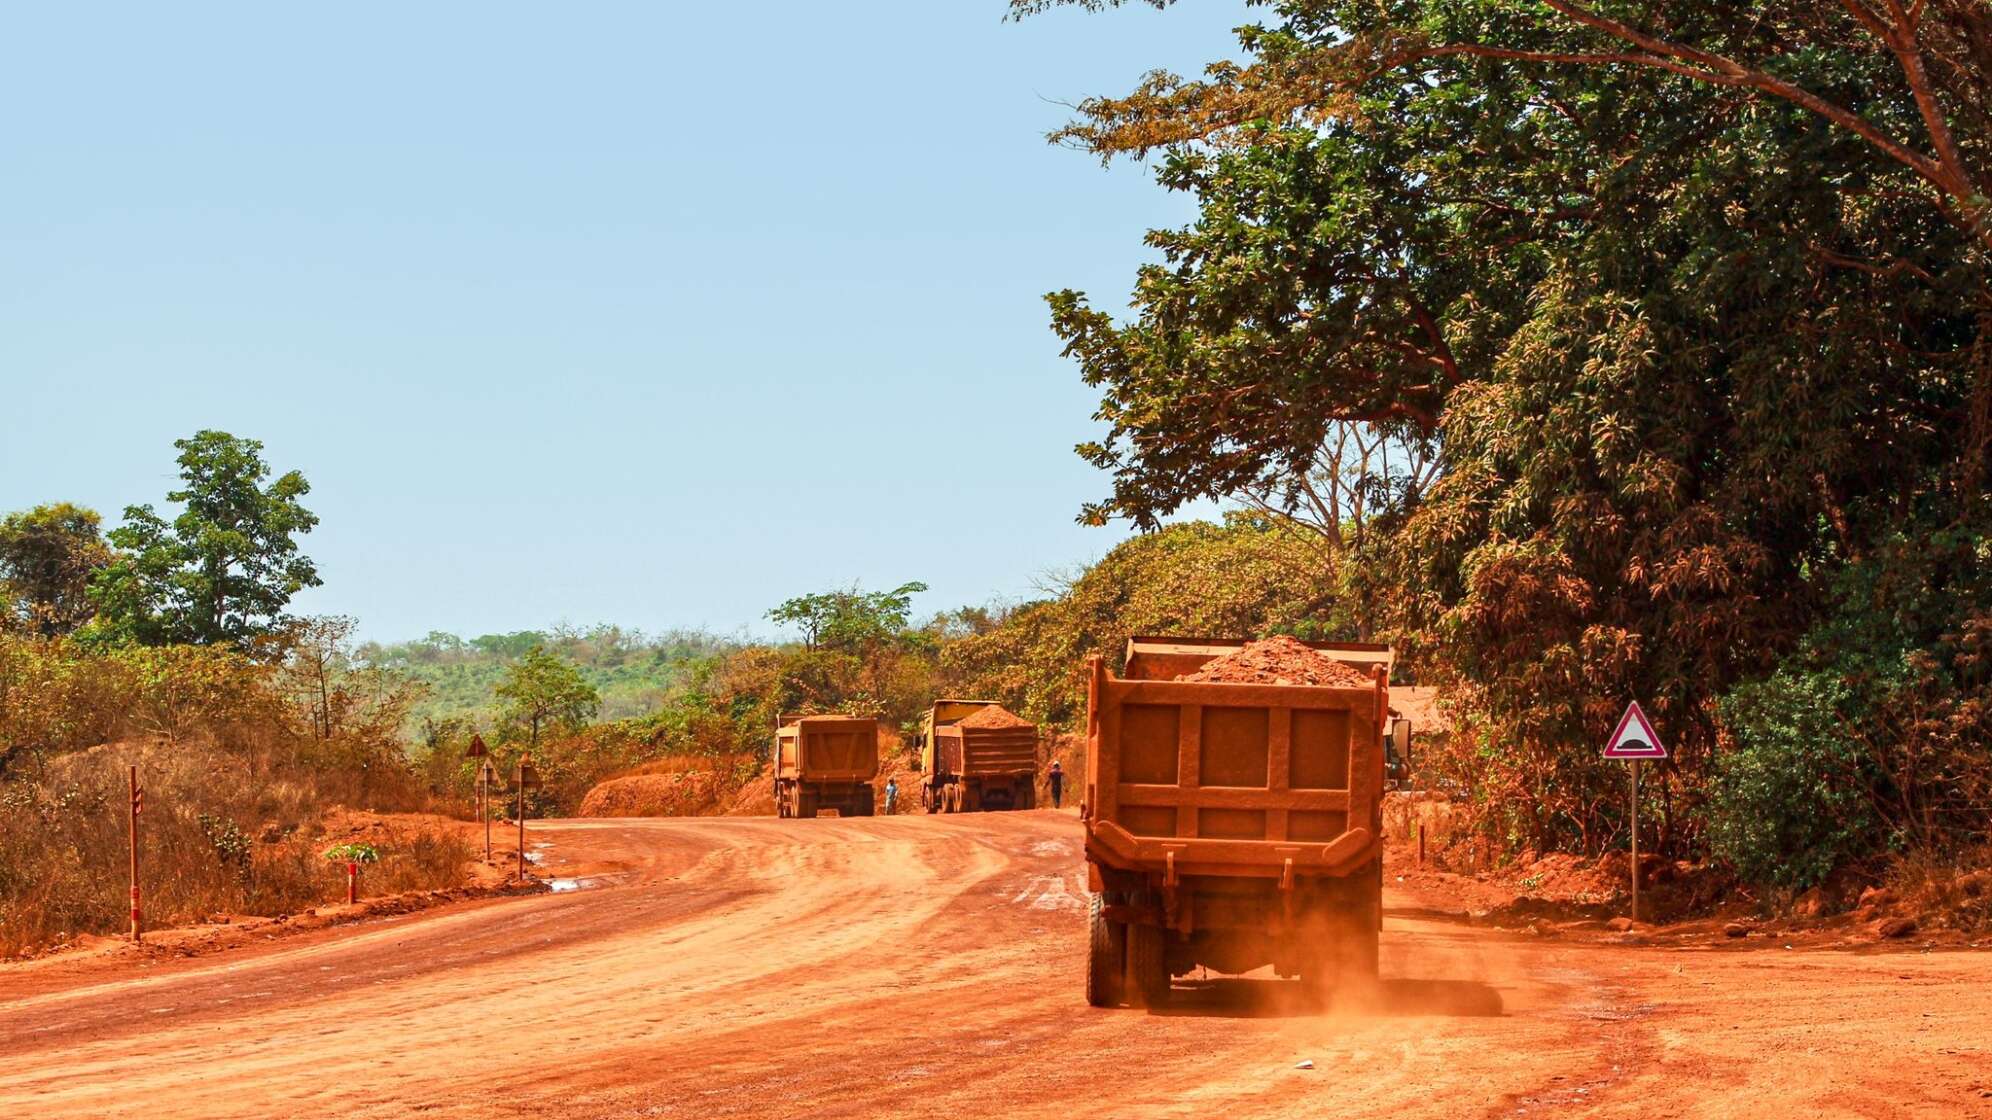 Bergbau bedroht Menschenaffen in Afrika